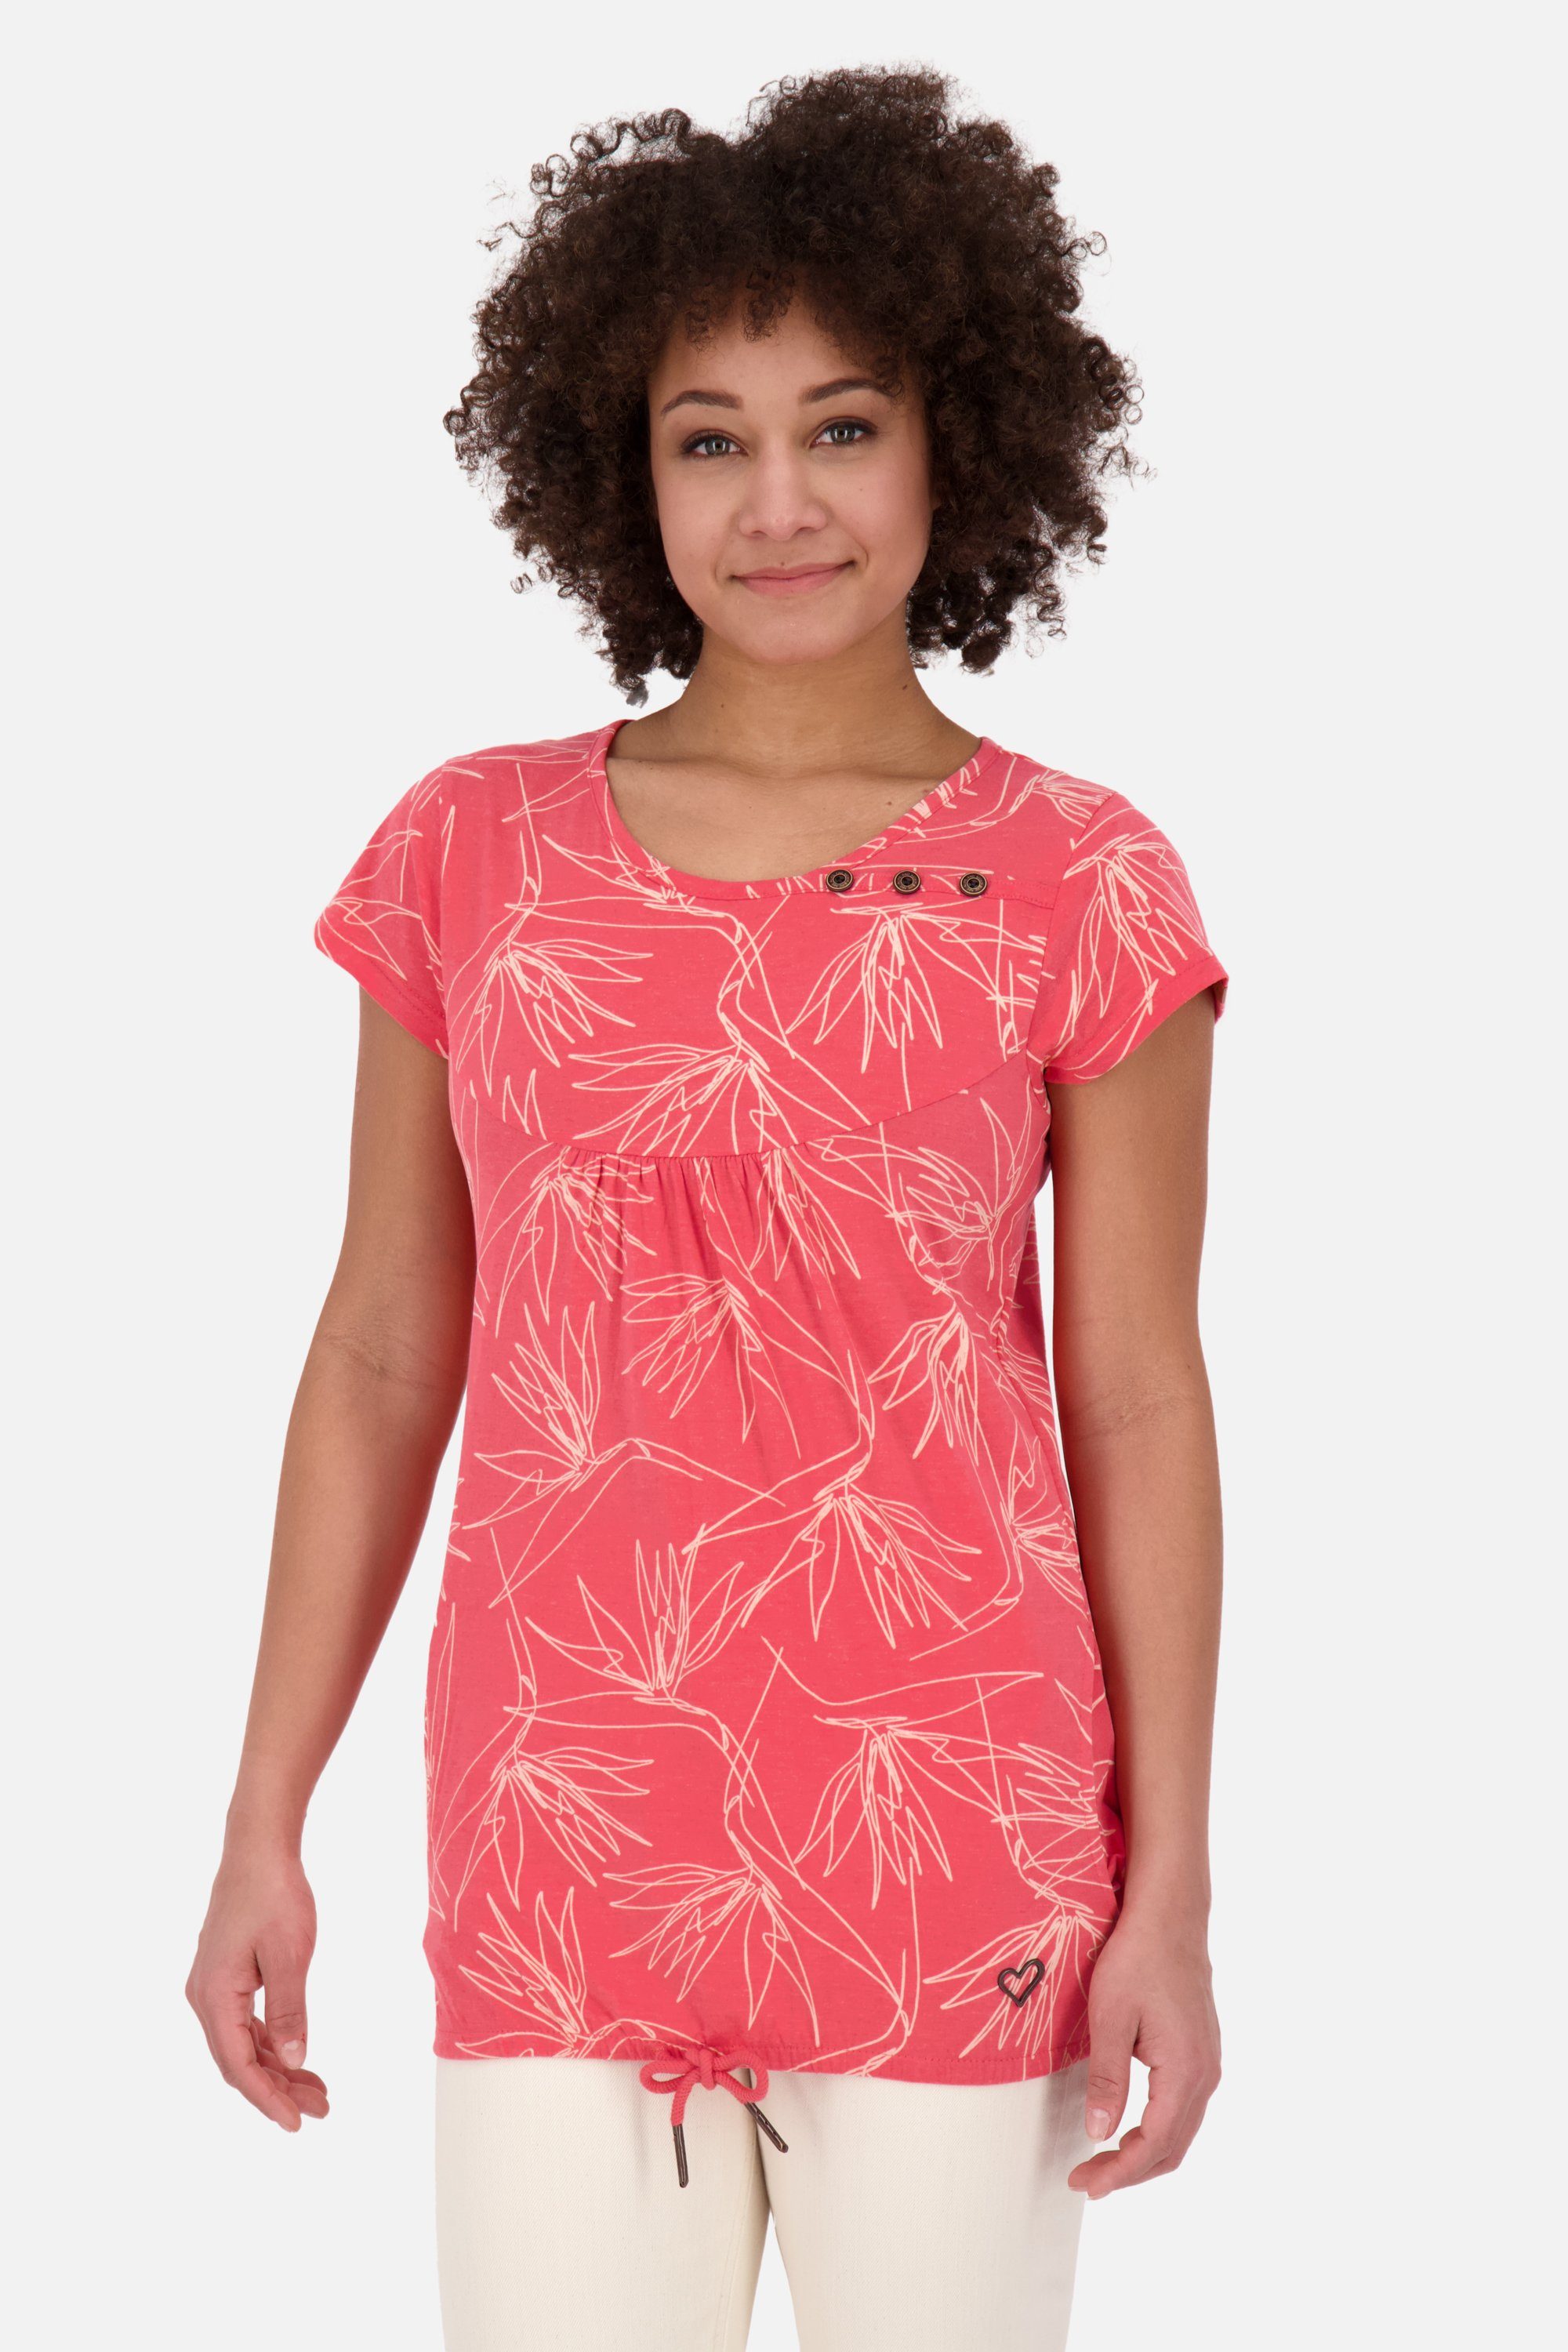 Alife & Kickin B Kurzarmshirt, Rundhalsshirt Damen Shirt coral melange SummerAK Shirt